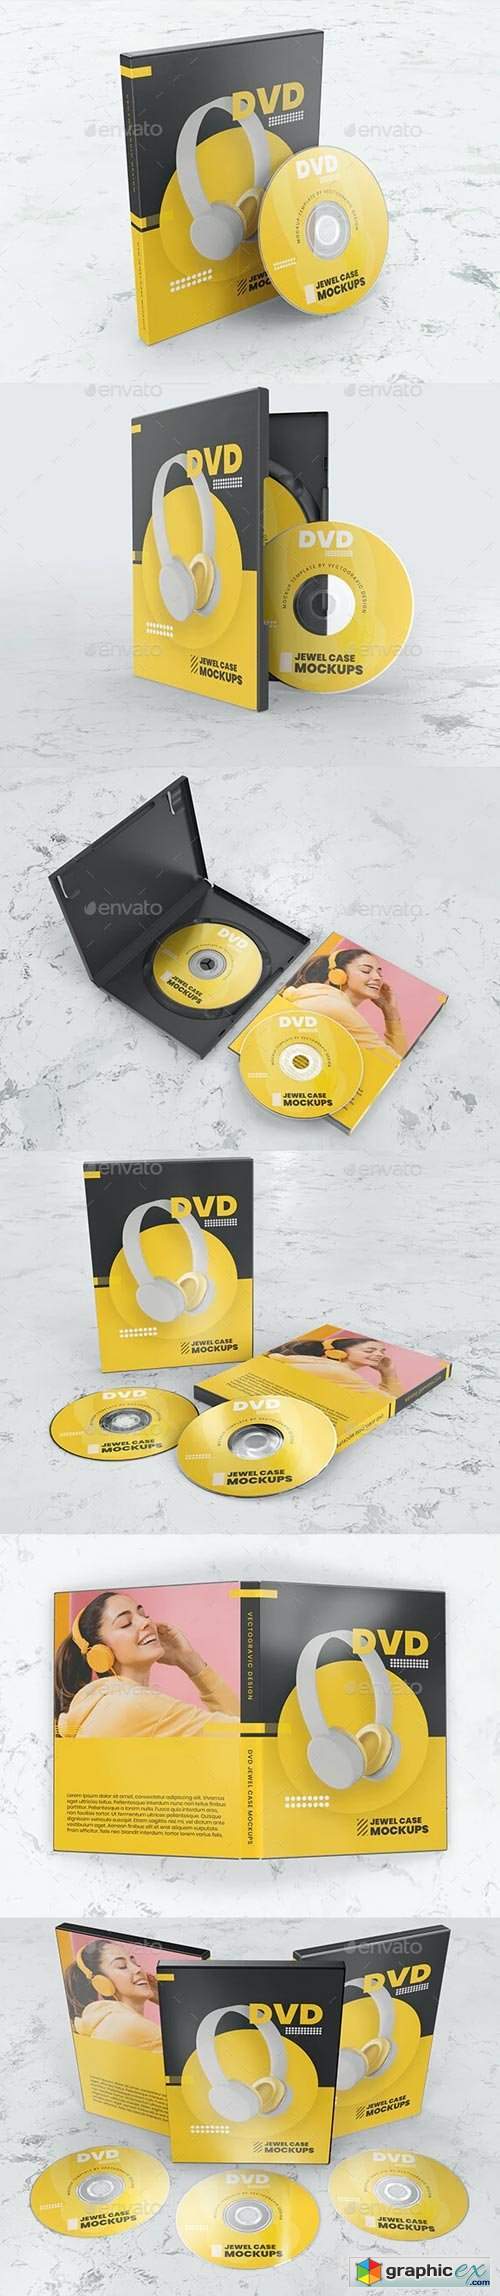 CD DVD Case Mockups